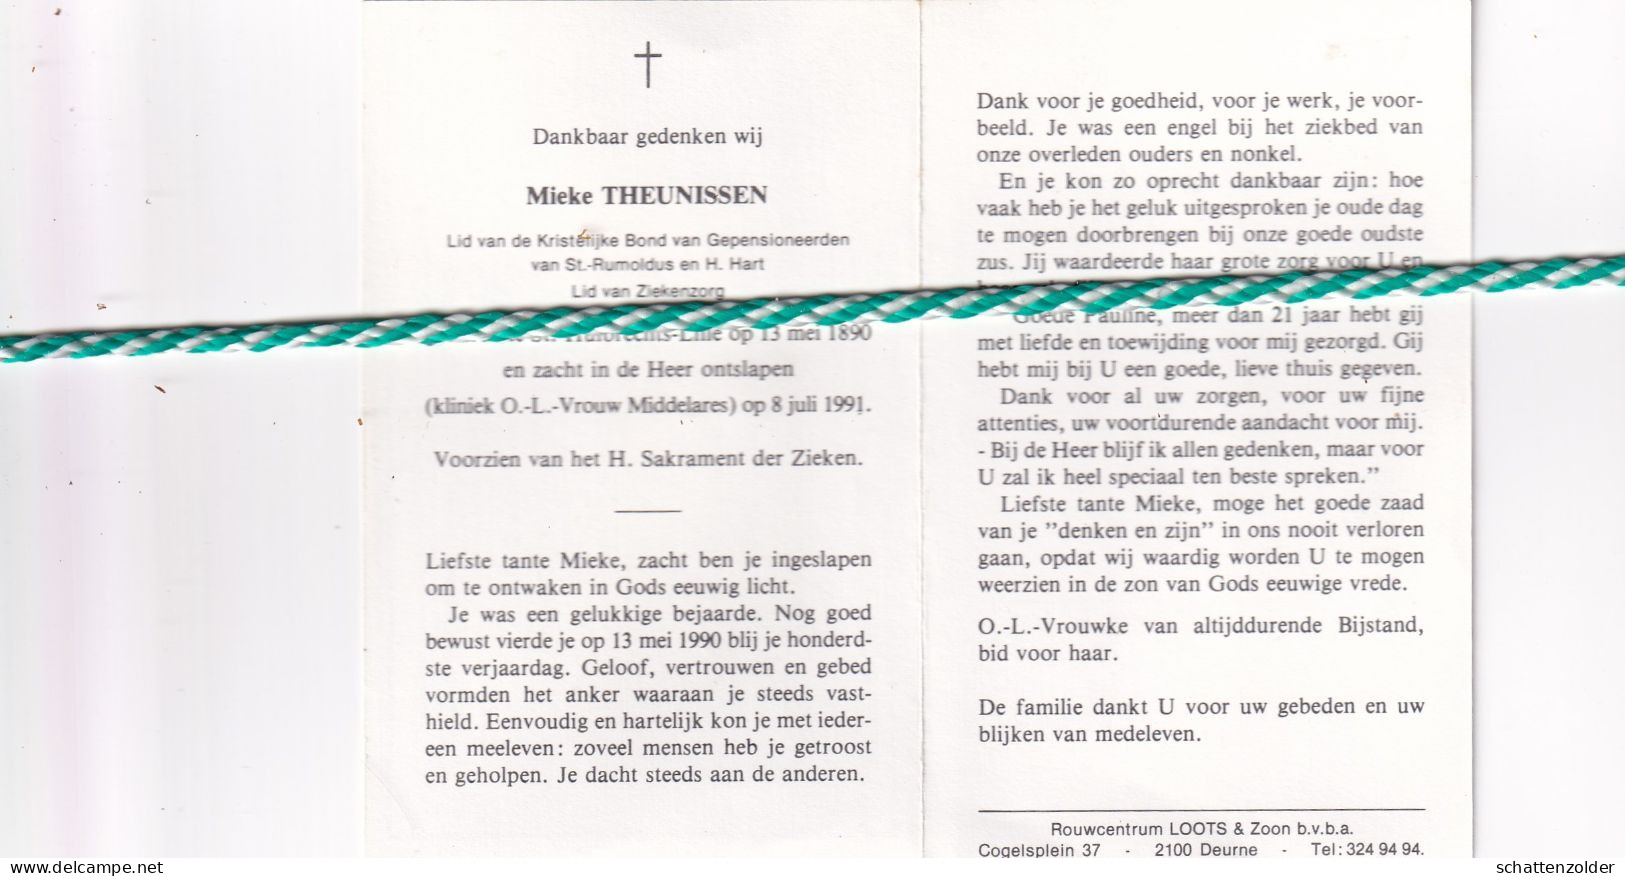 Mieke Theunissen, Sint-Huibrechts-Lille 1890, 1991. Honderdjarige - Décès